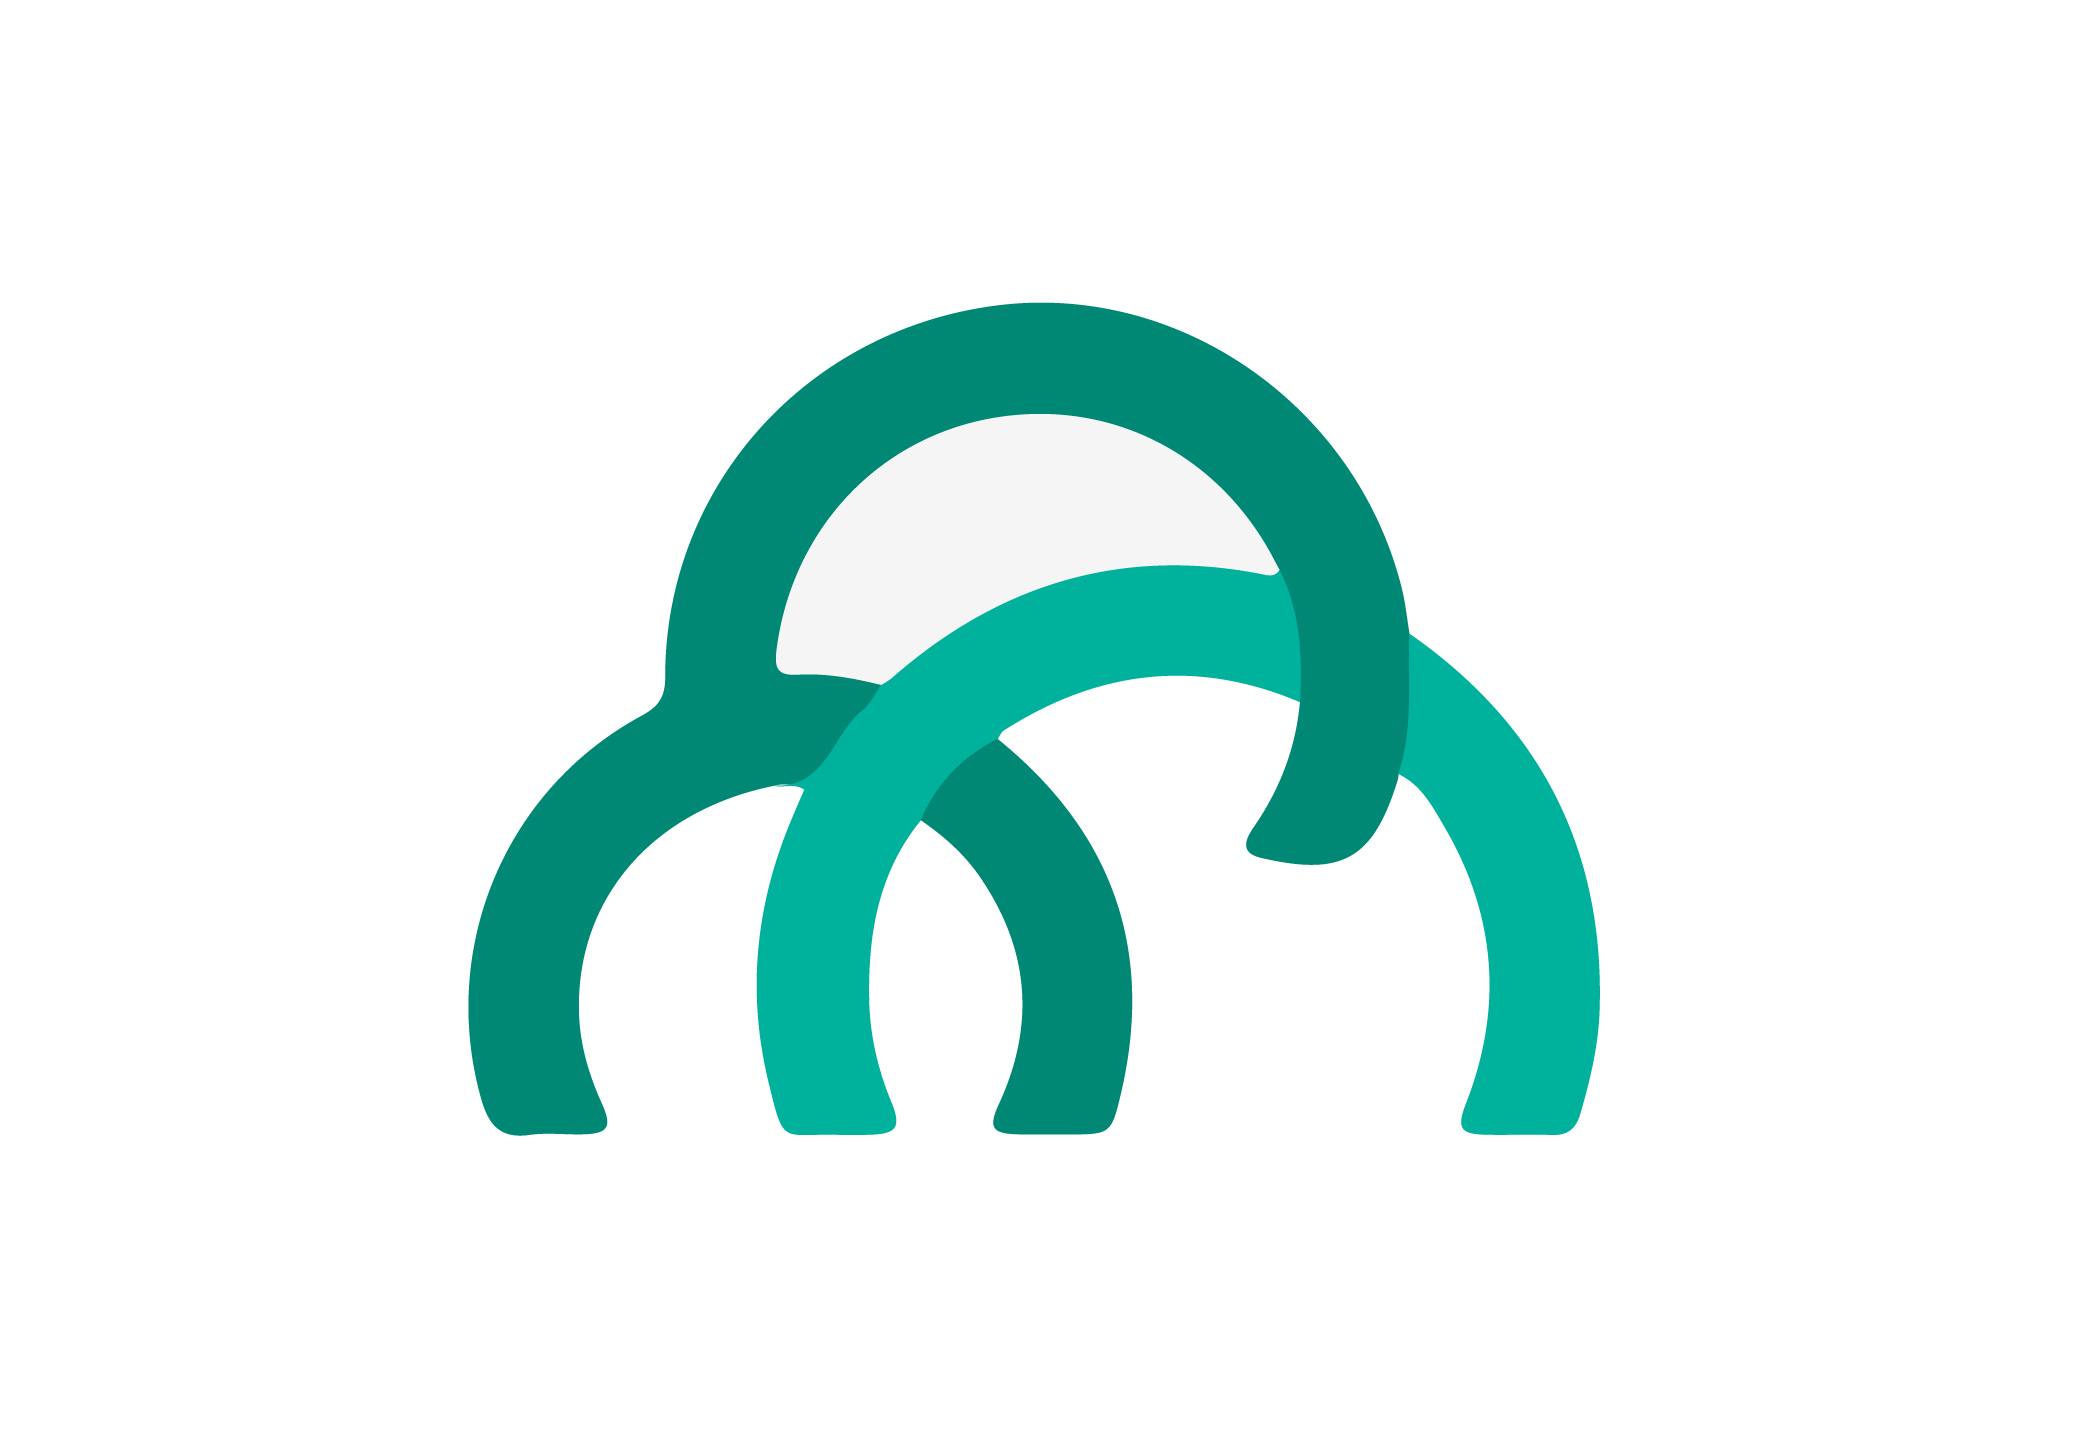 Pivotal Cloud Foundry logo